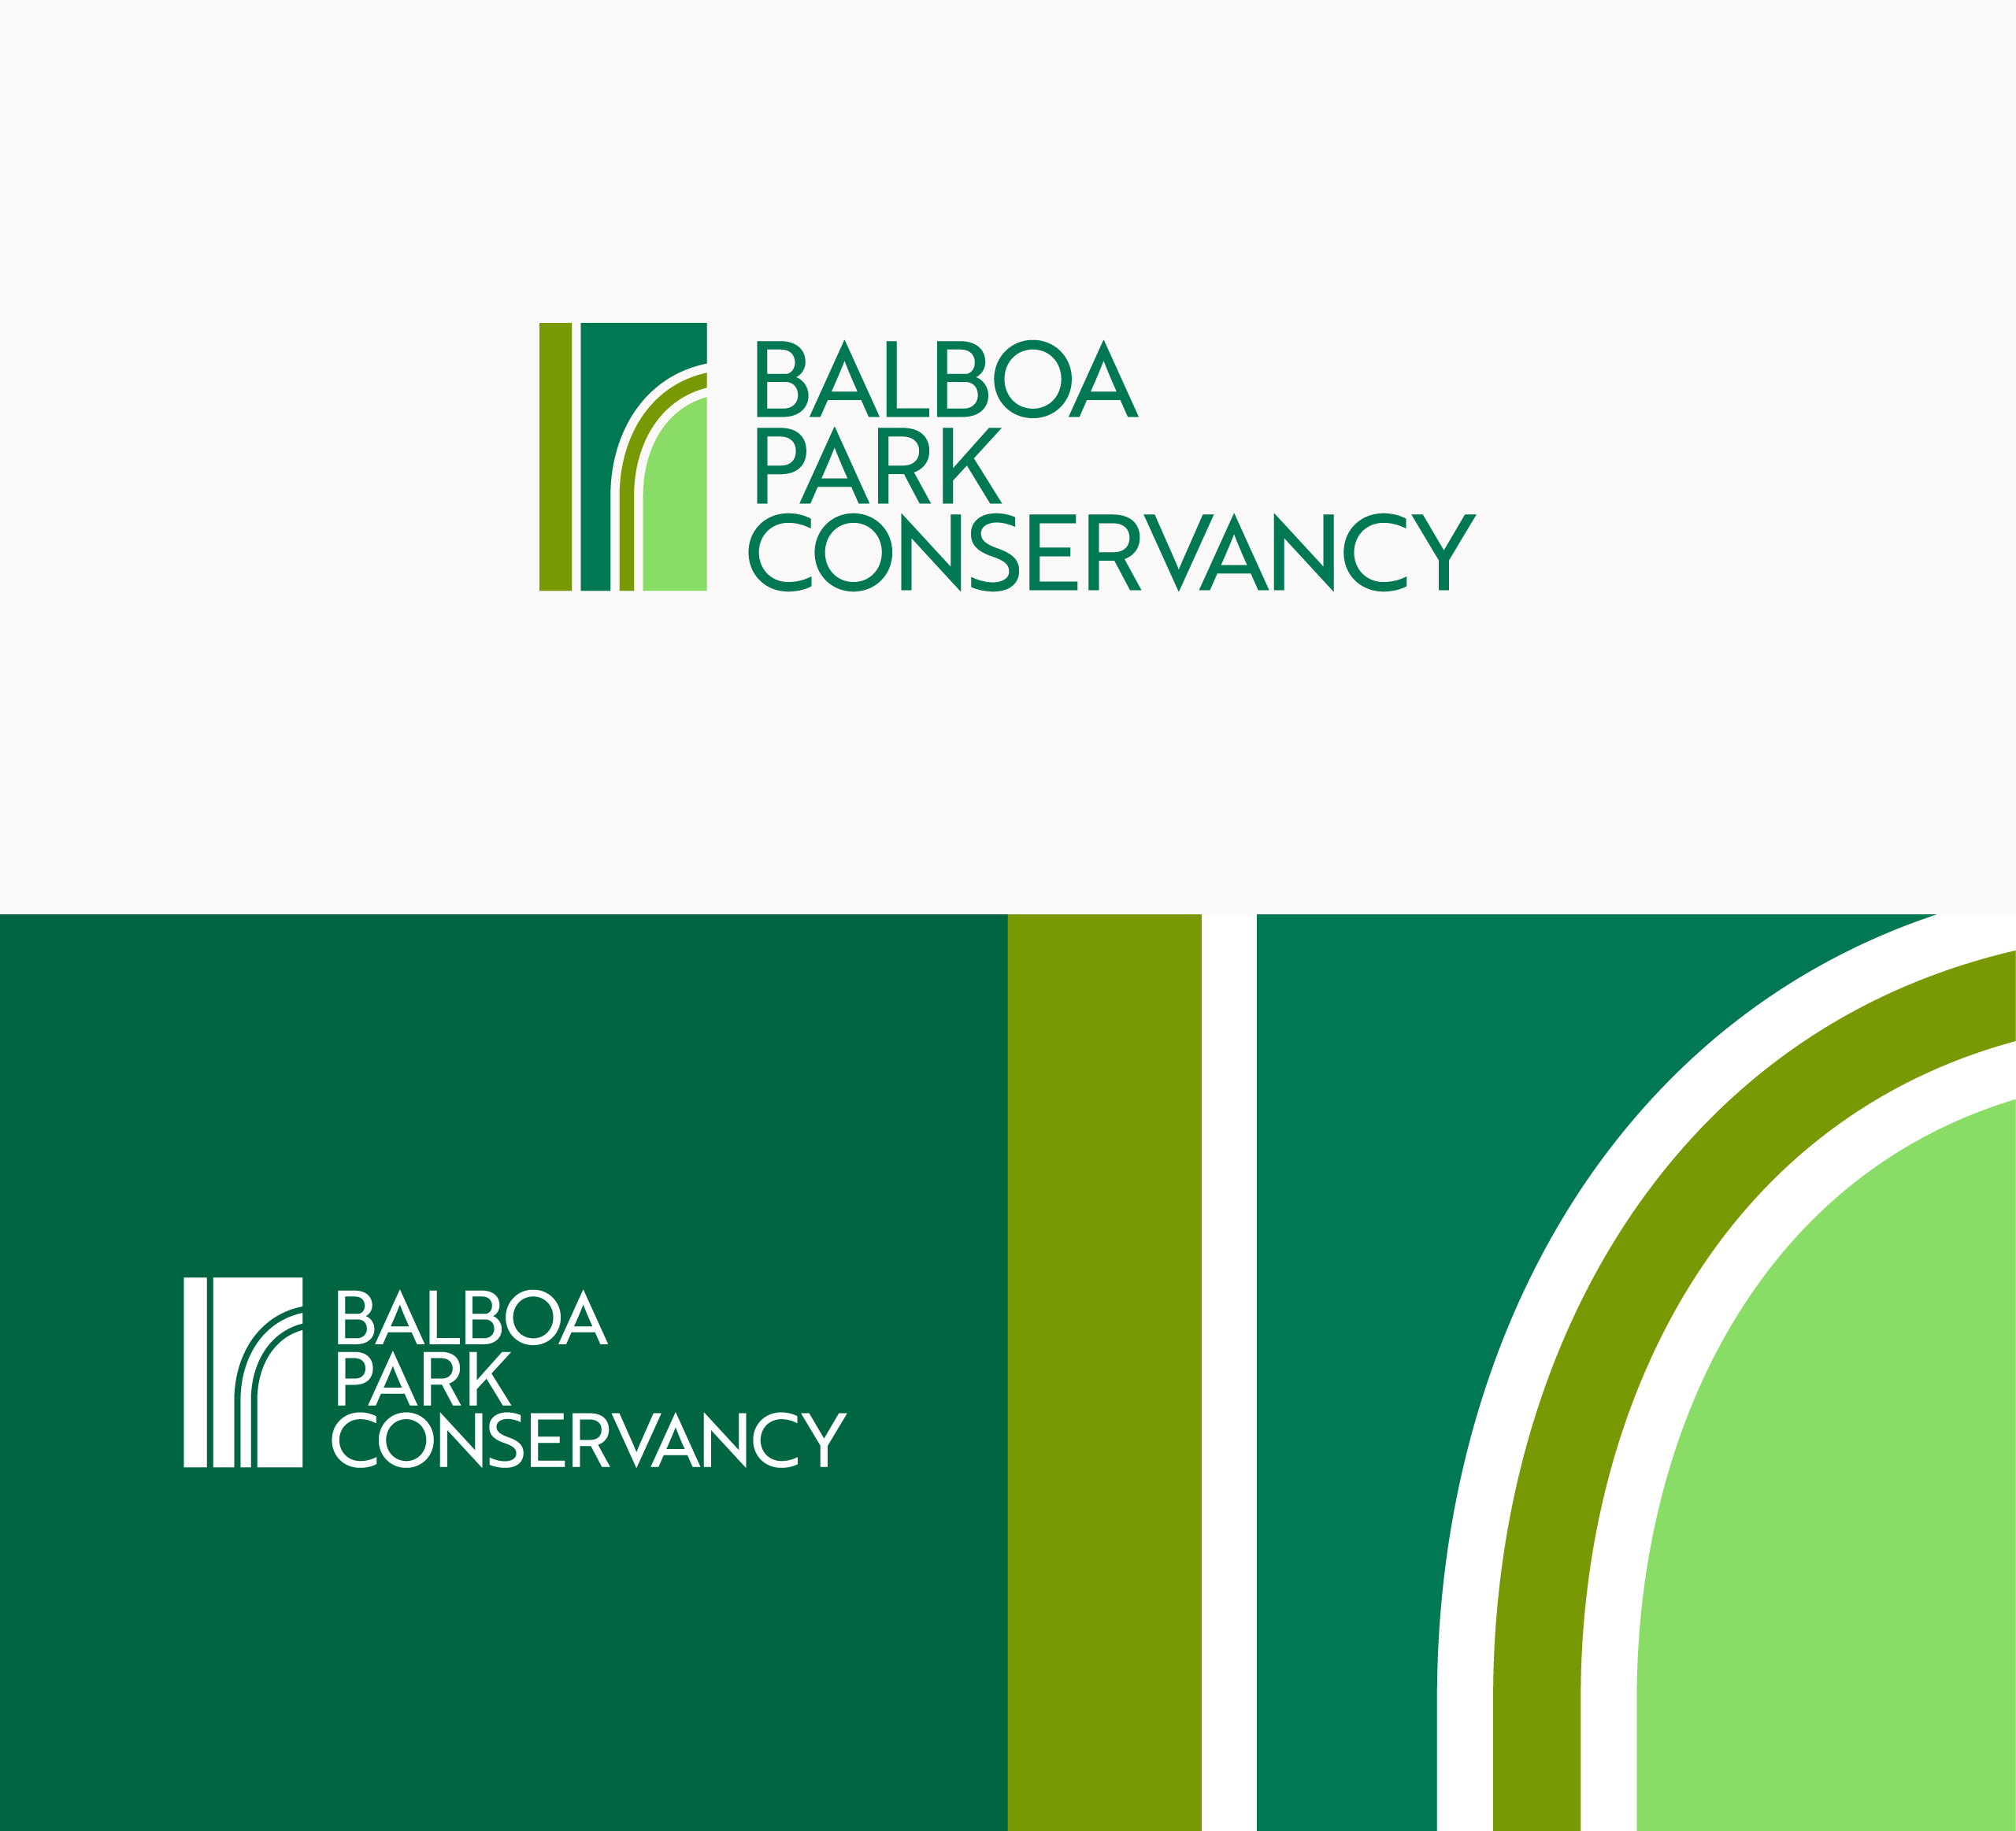 Balboa Park Conservancy Brand Identity